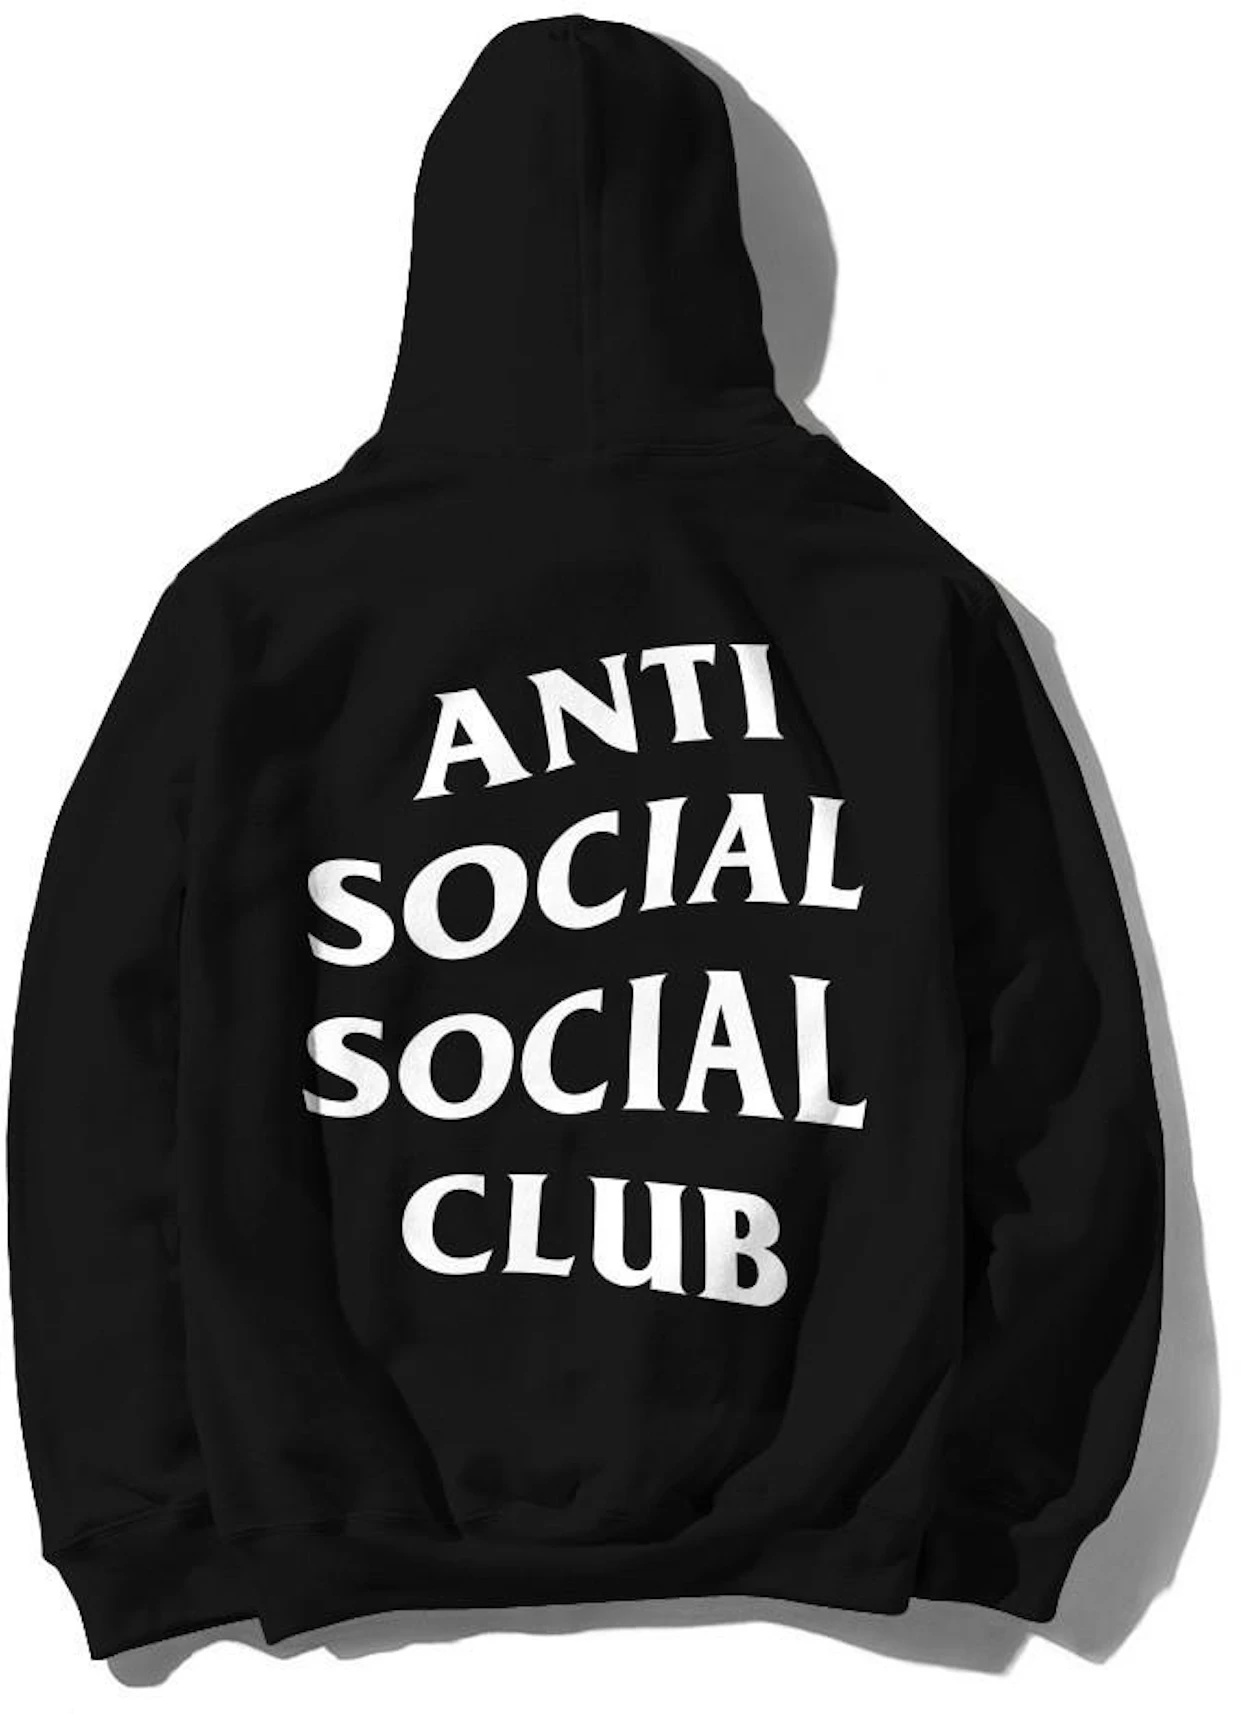 Arriba 95+ imagen anti social social club hoodie stockx